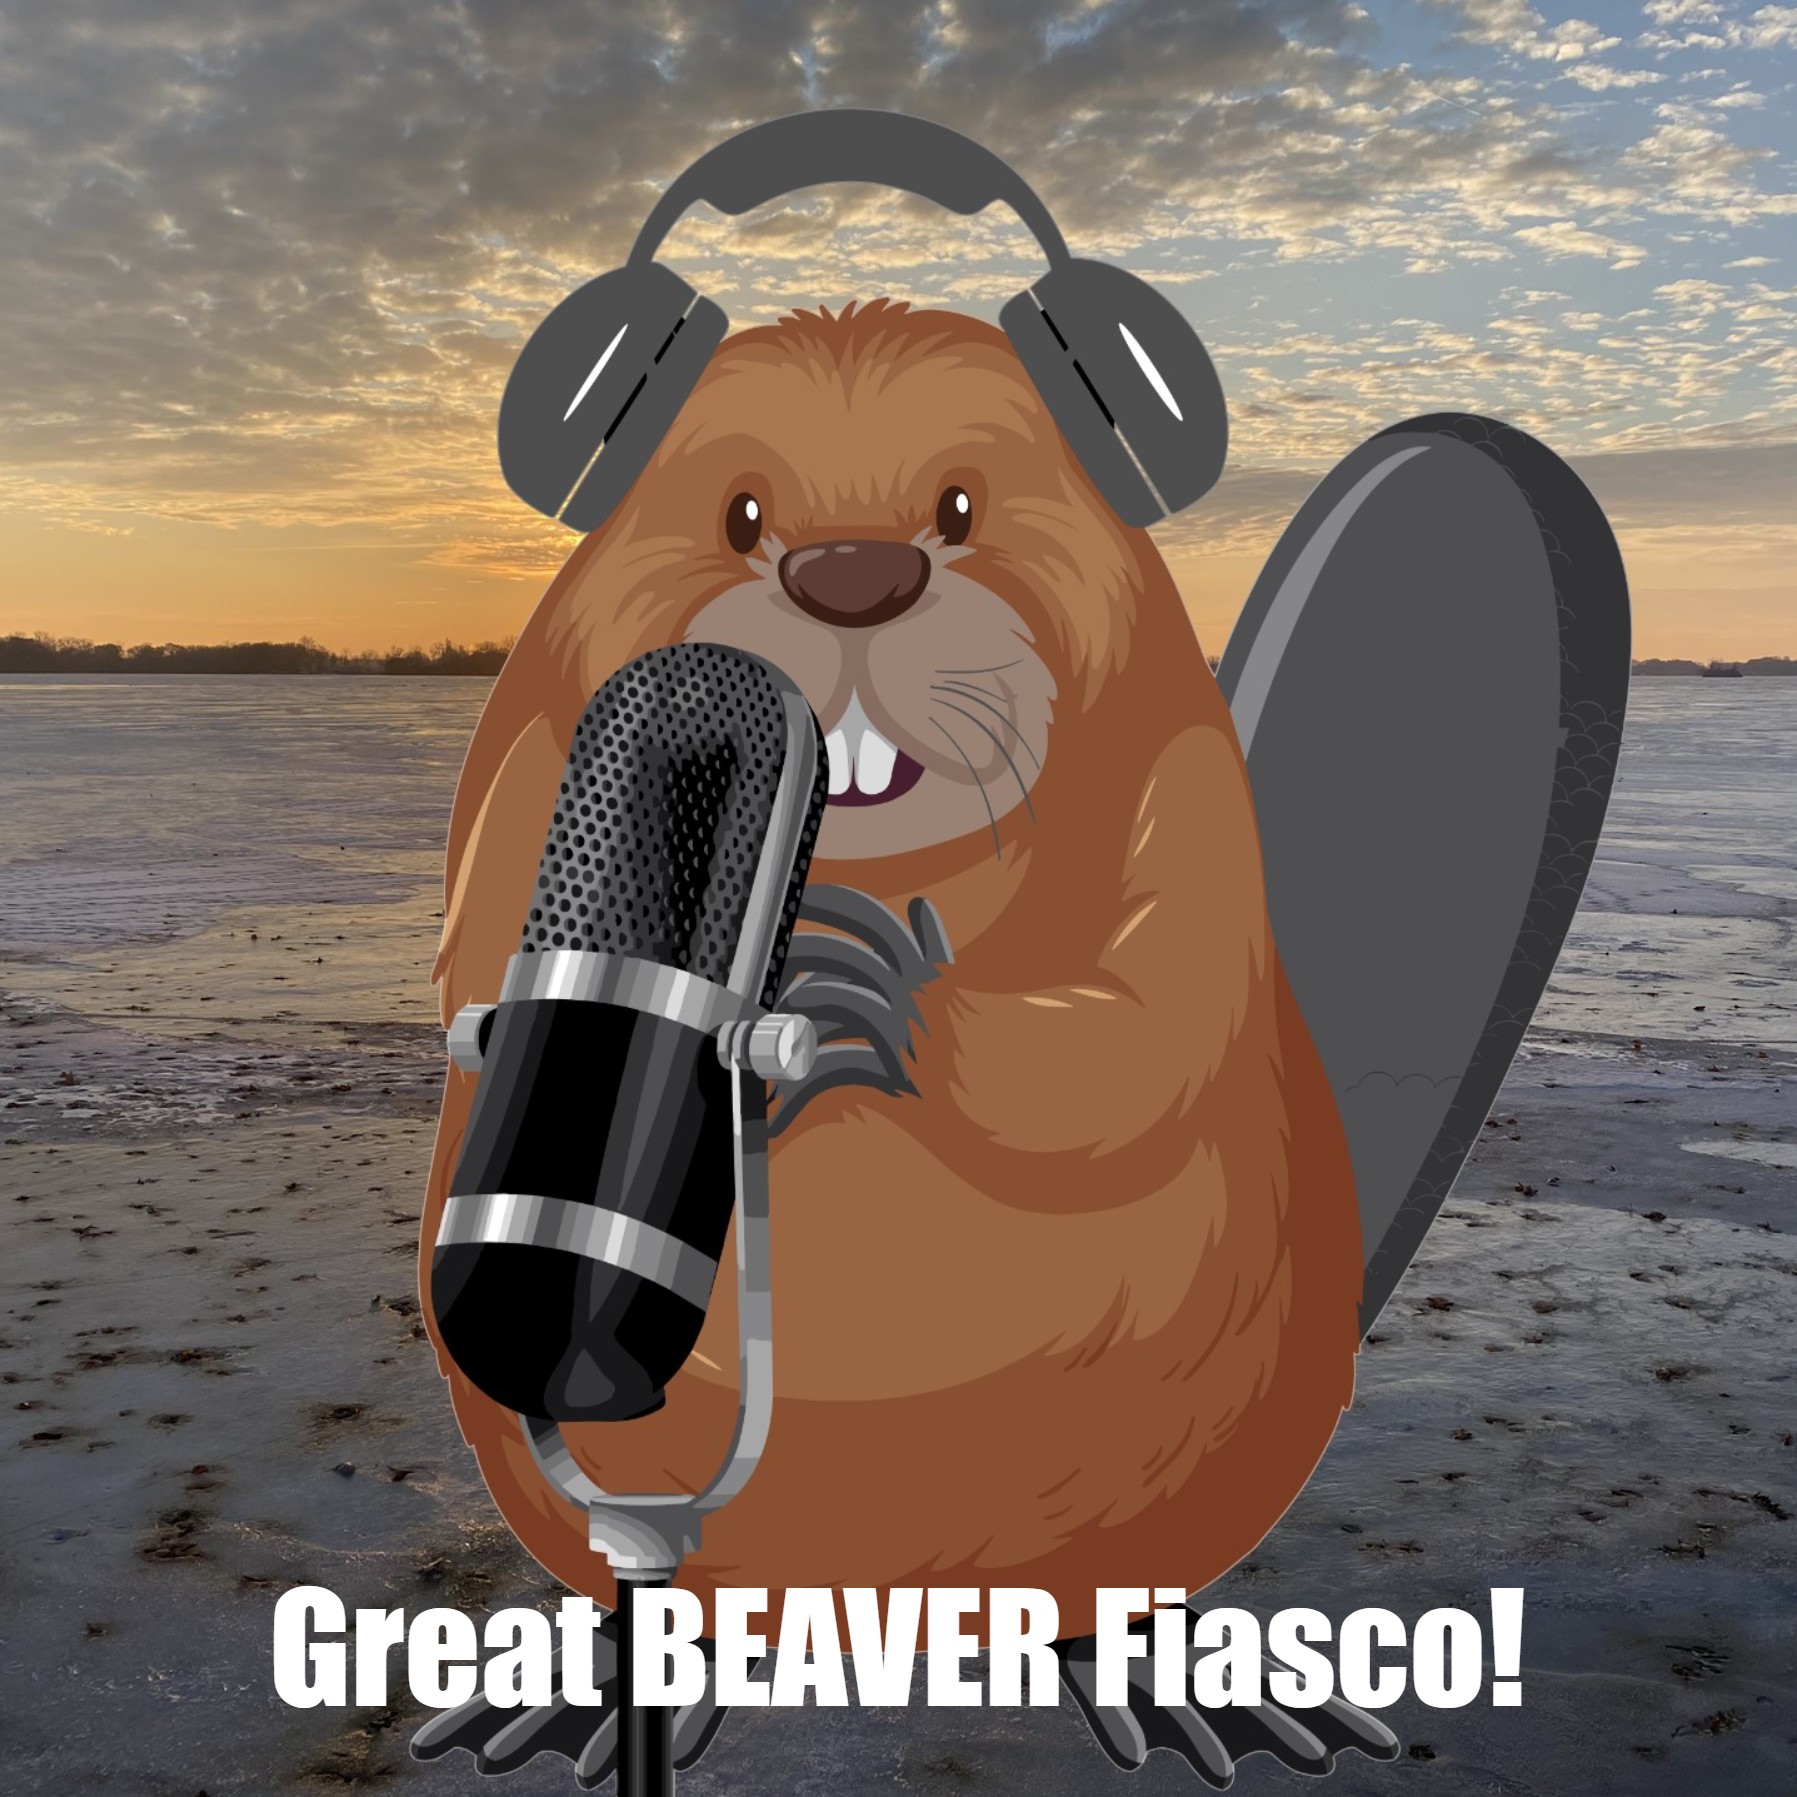 The Great Beaver Fiasco